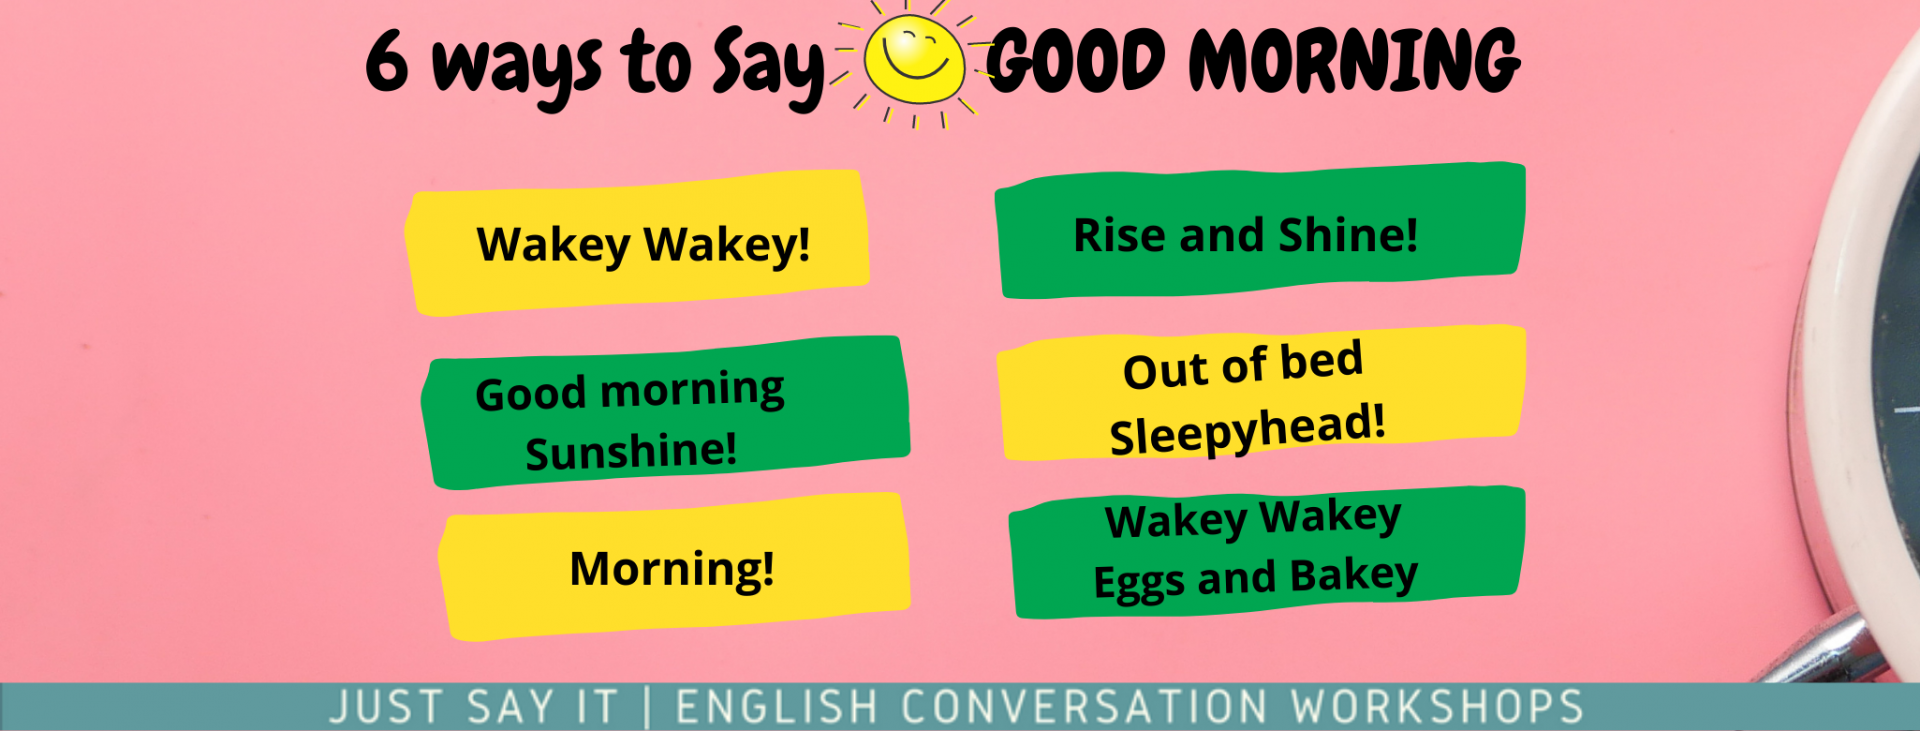 Ways To Say Good Morning